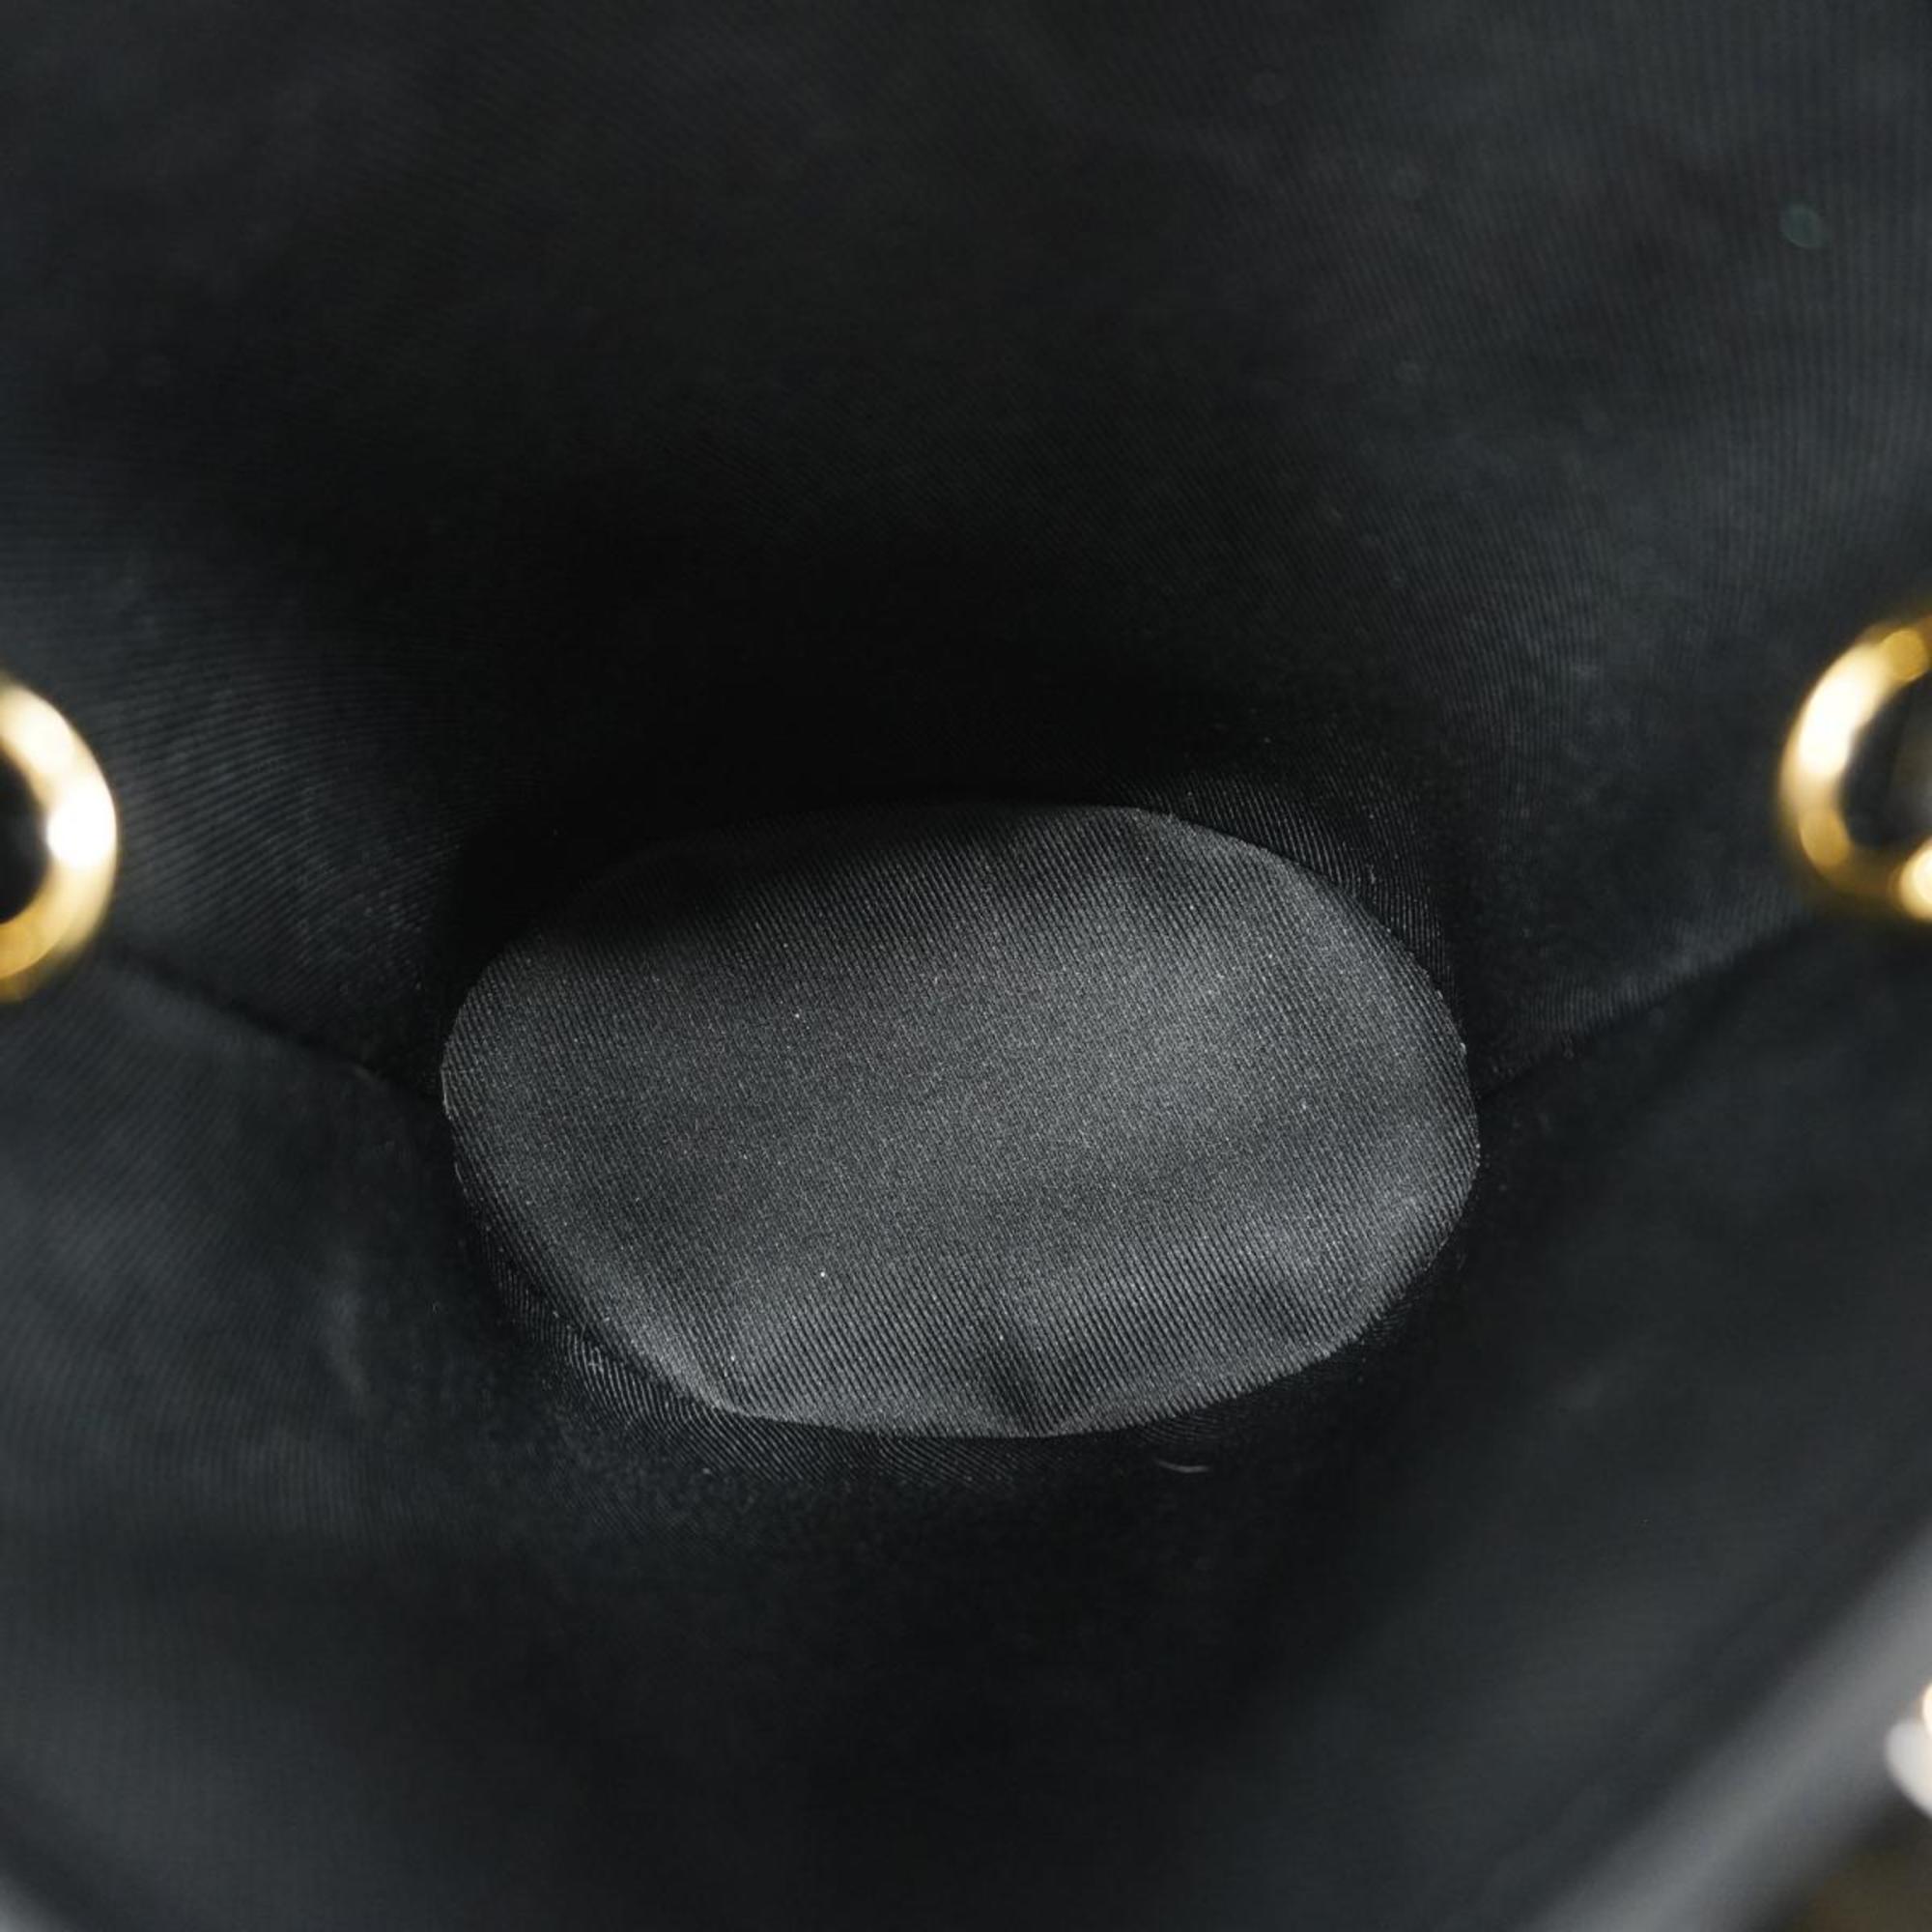 Louis Vuitton Handbag LV By The Pool Nano Bucket M82418 Beige Black Women's